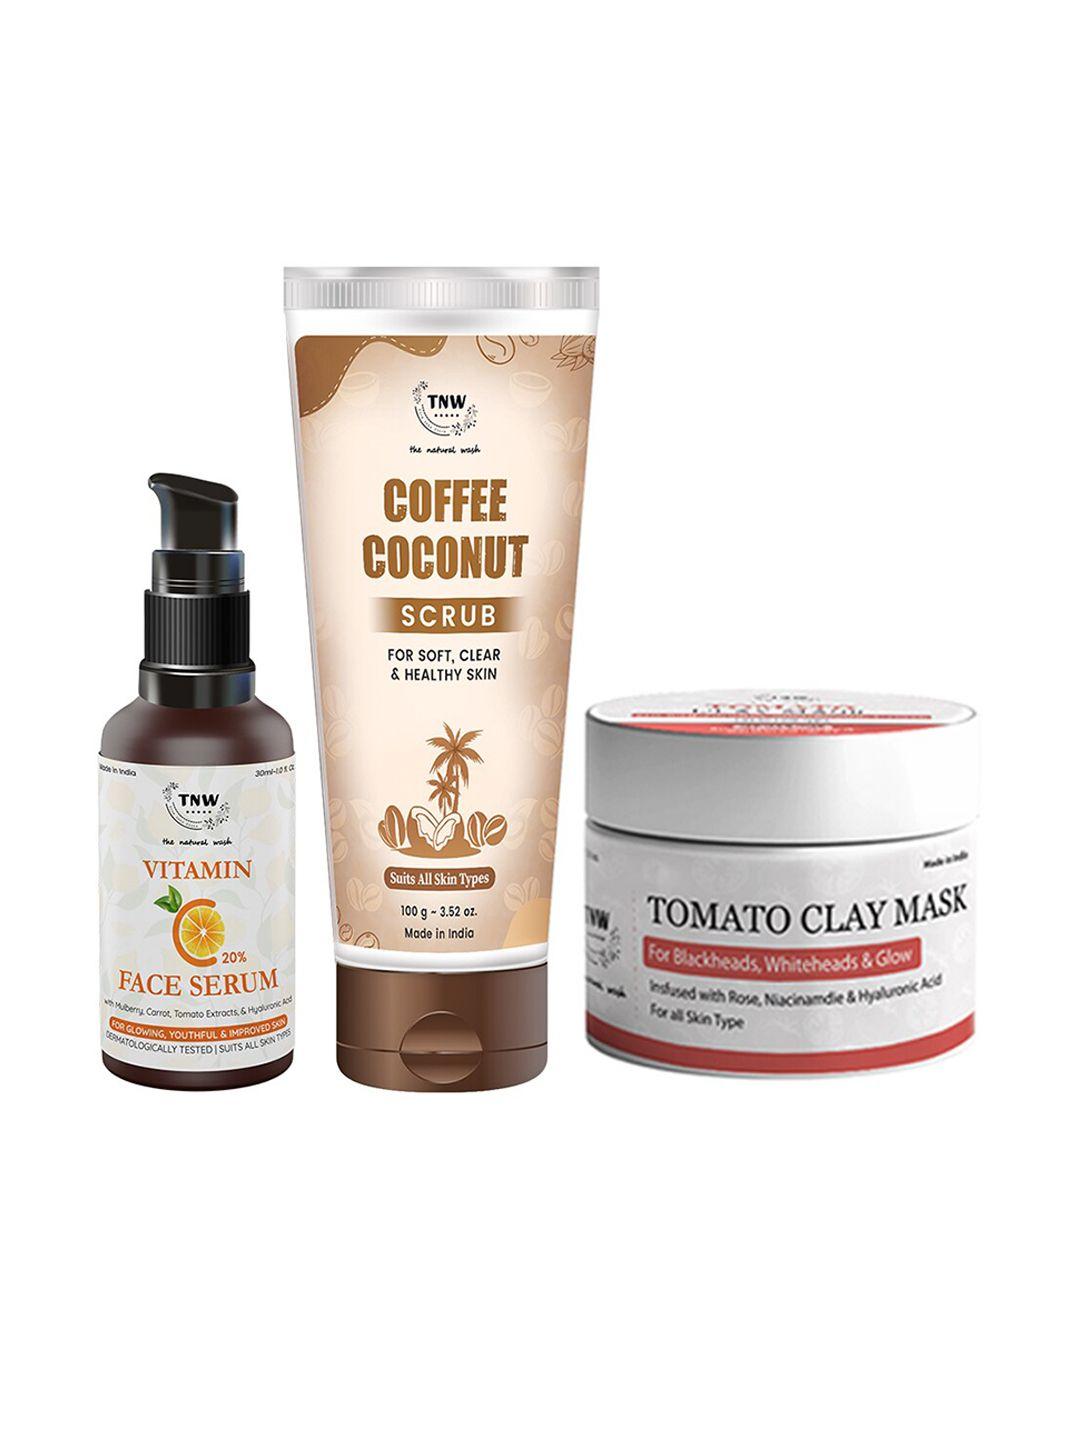 tnw the natural wash set of vitamin c face serum, tomato clay mask & coffee coconut scrub